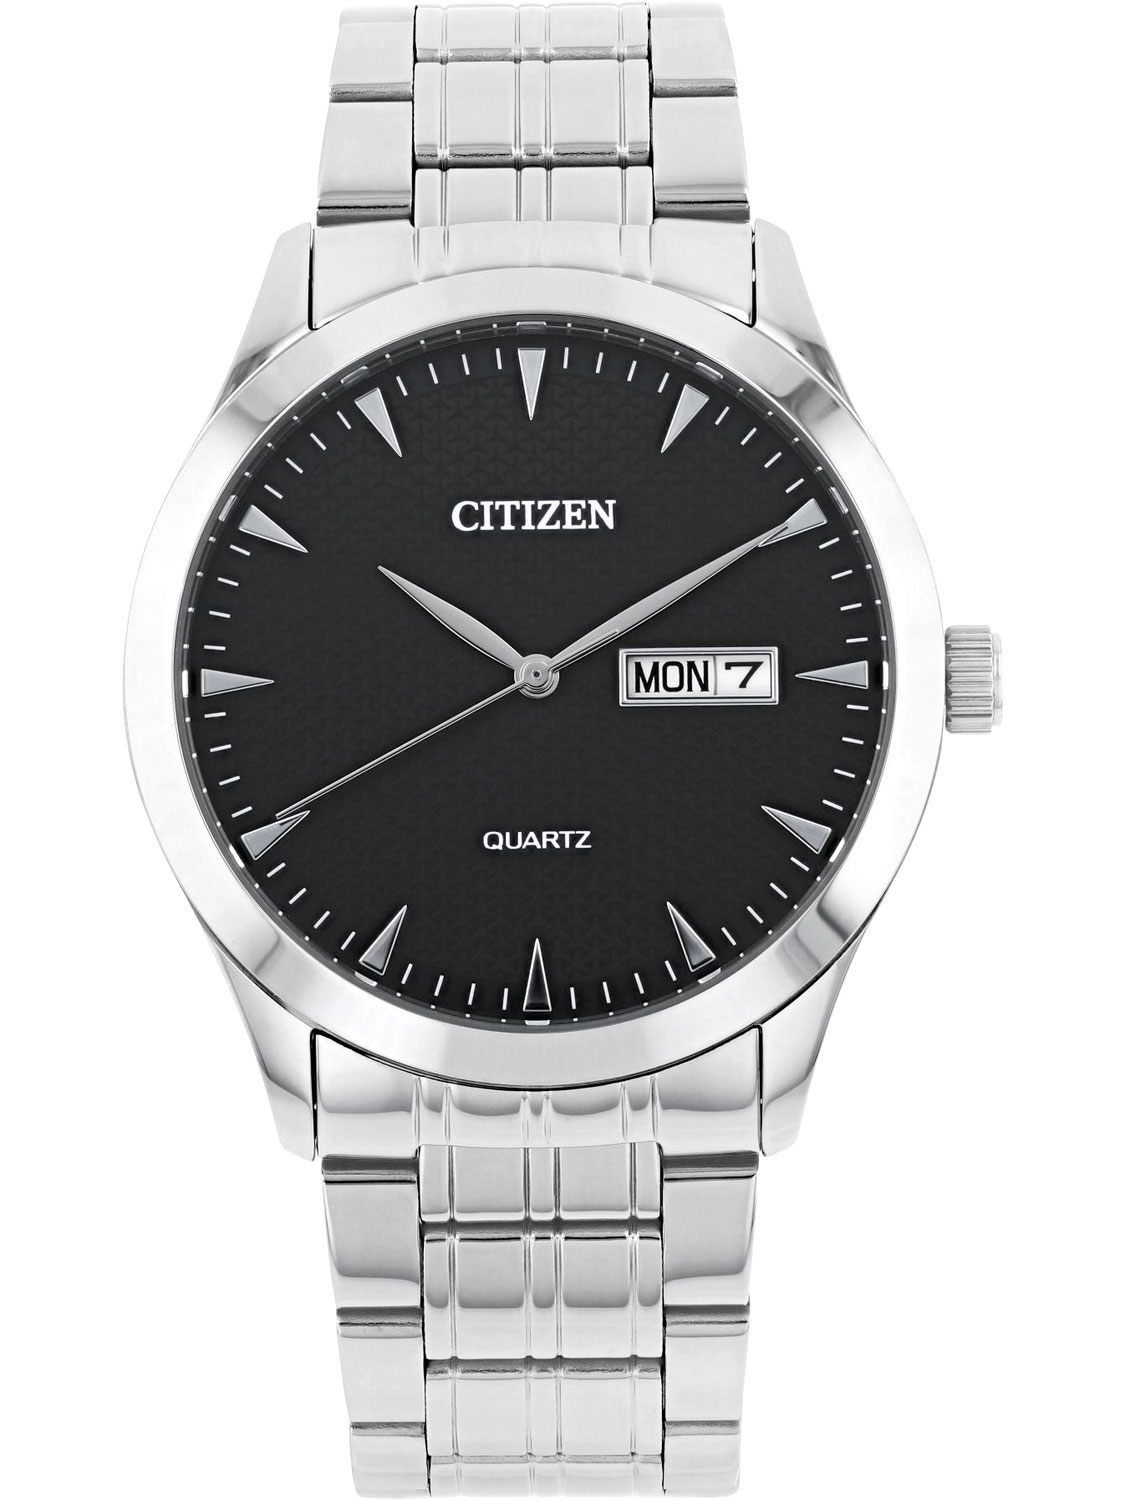    Citizen DZ5010-54E